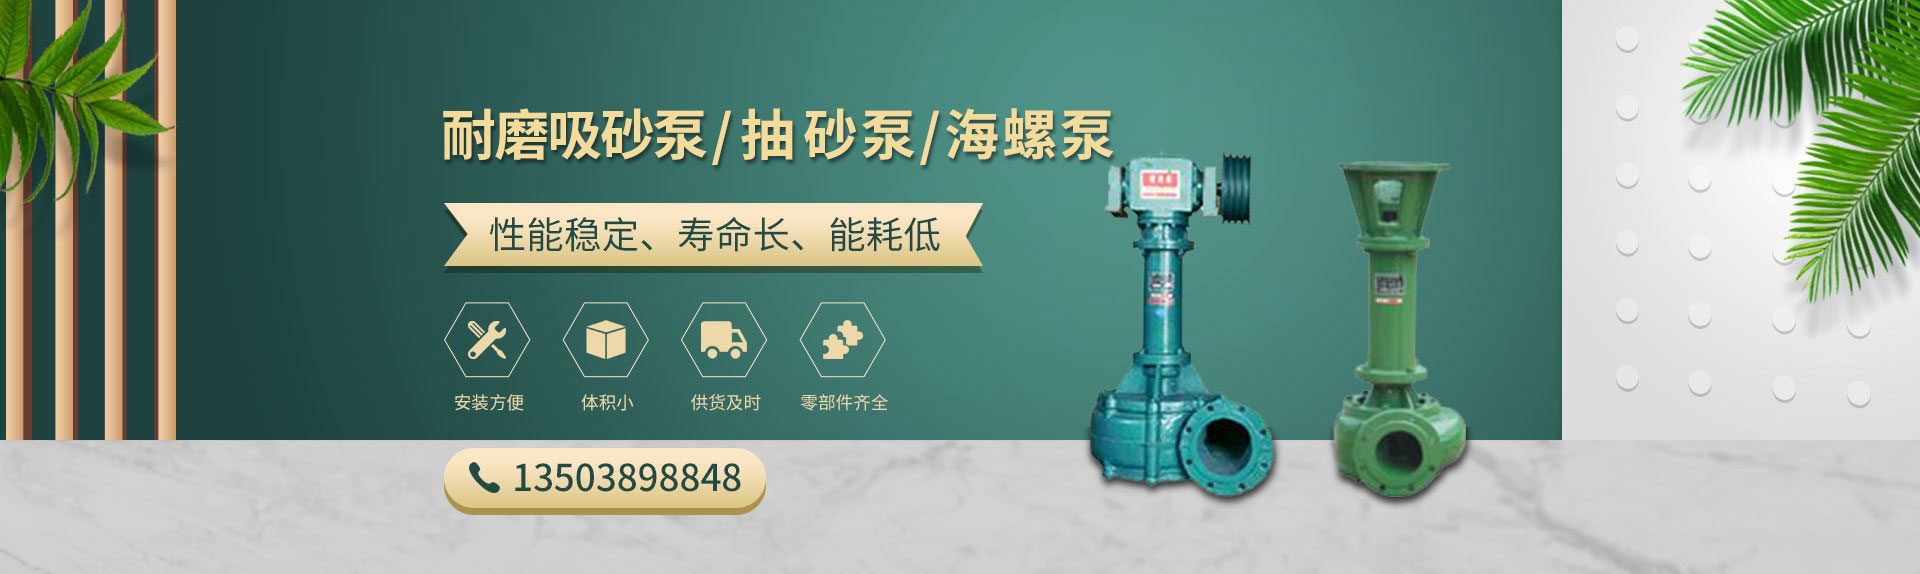 k8凯发(中国)app官方网站_image6253